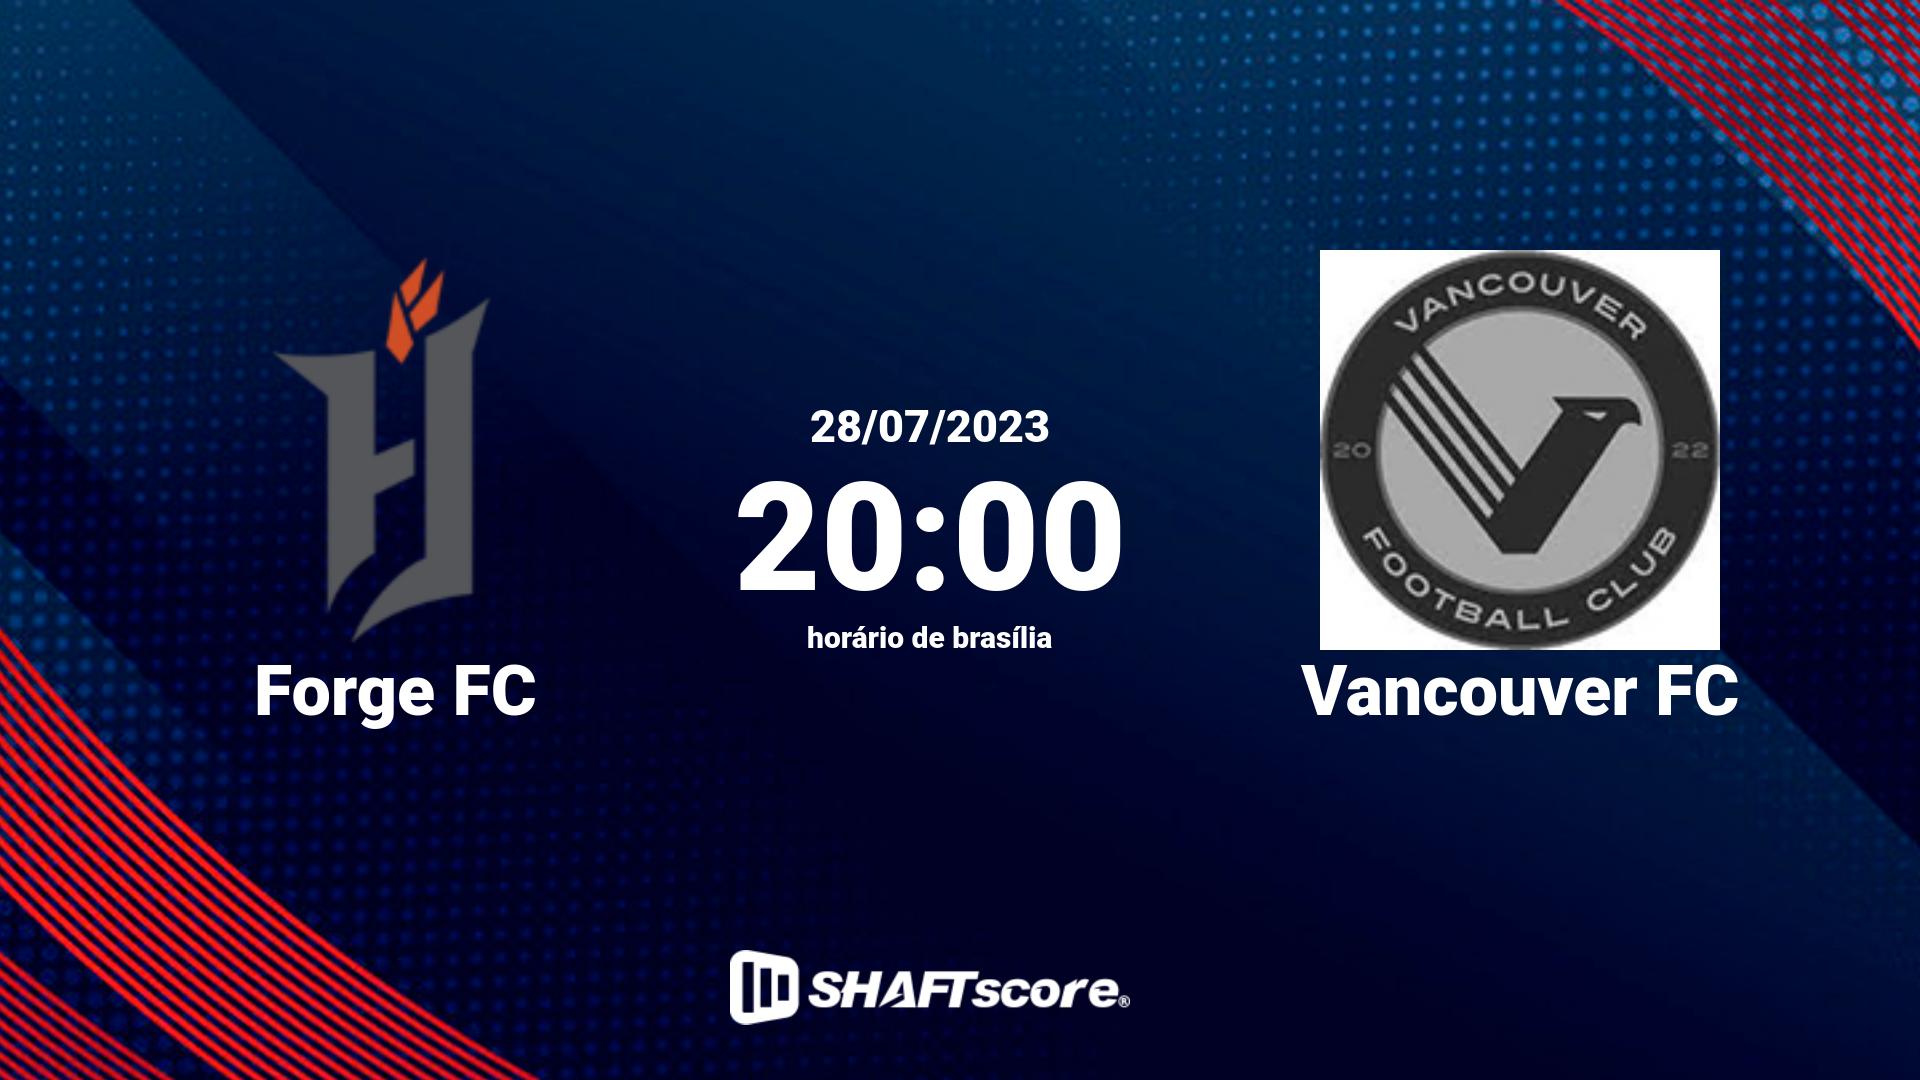 Estatísticas do jogo Forge FC vs Vancouver FC 28.07 20:00